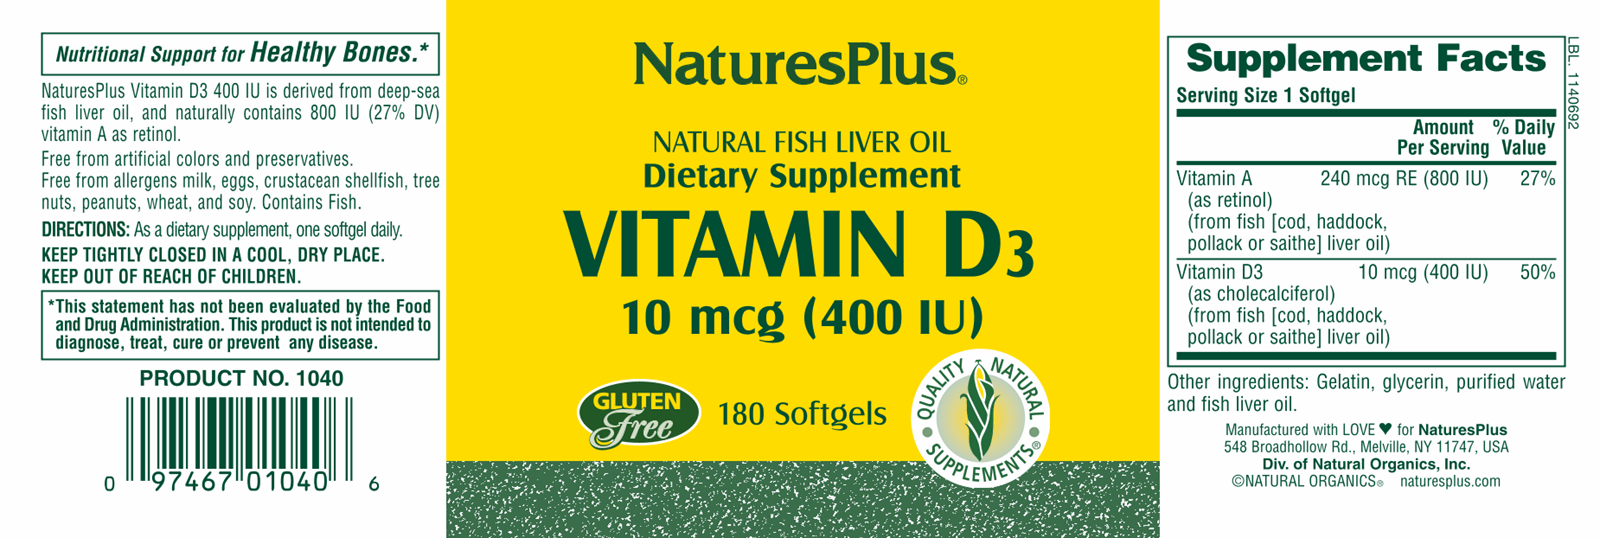 Vitamin D3 400 IU 